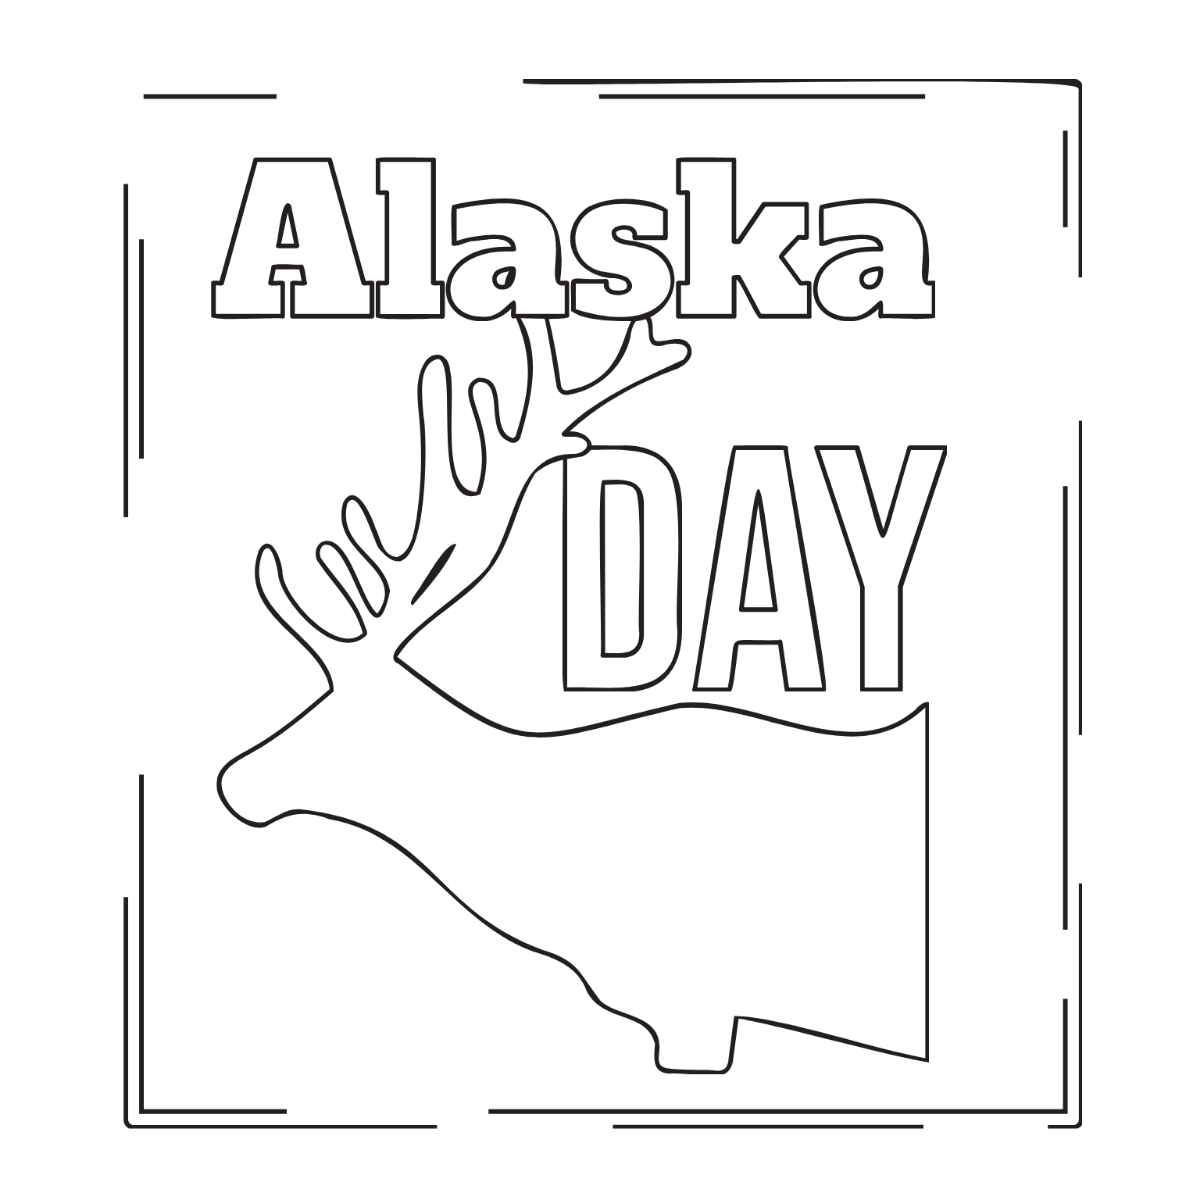 Free Alaska Day Drawing Vector Template